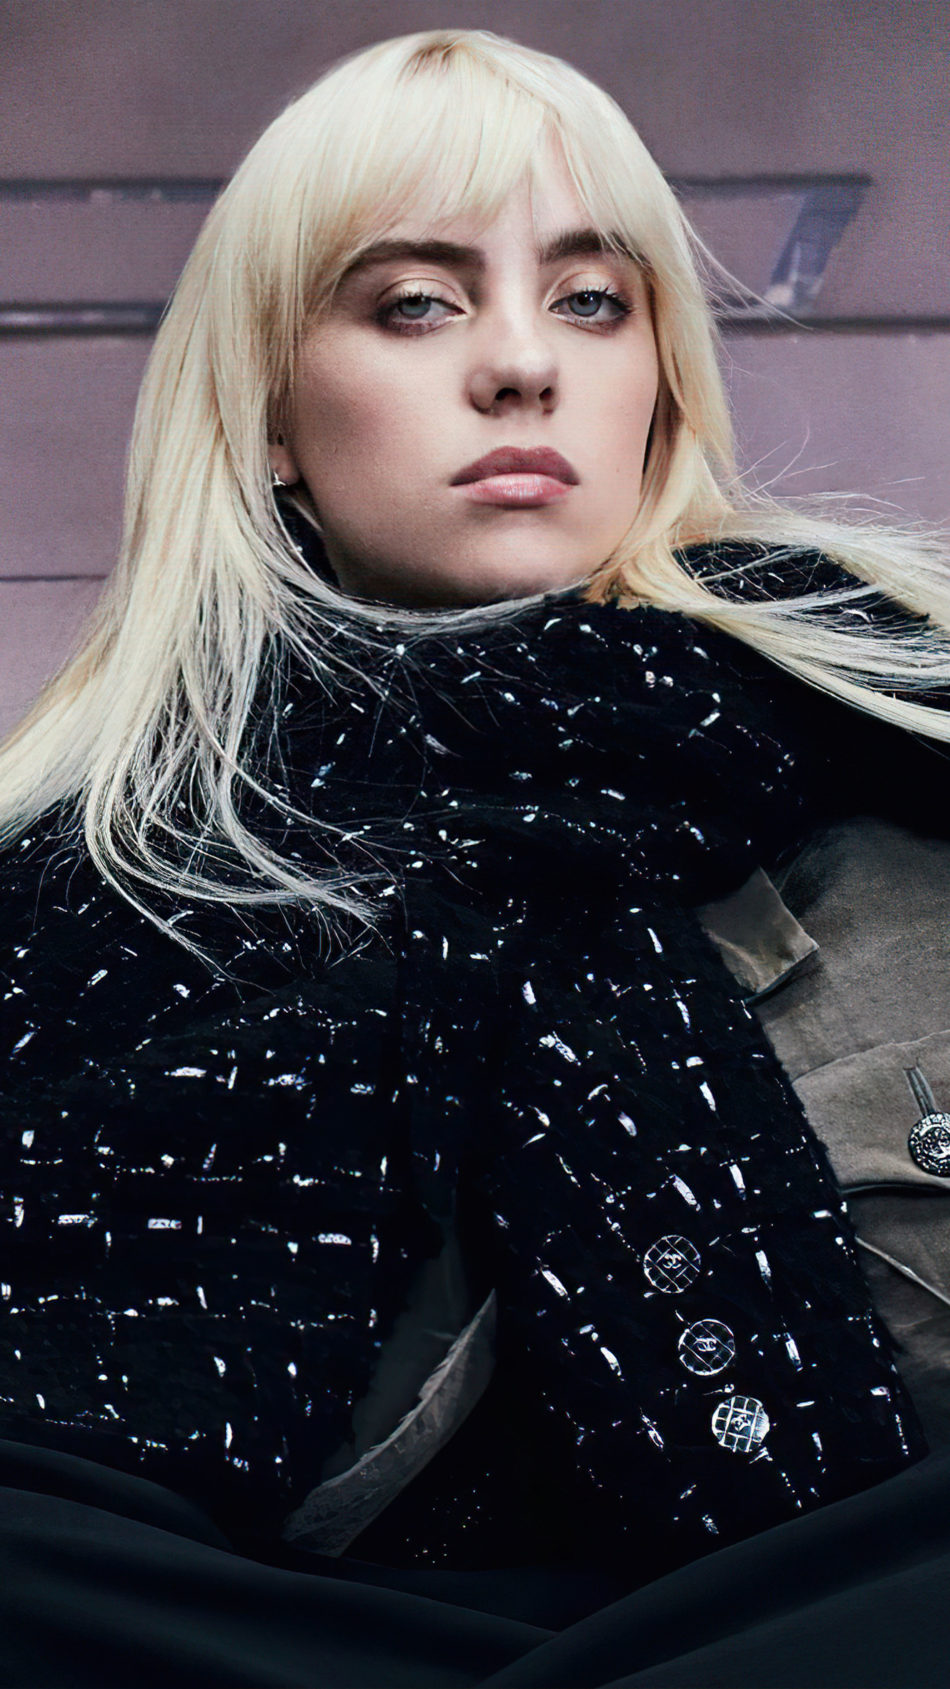 Billie Eilish In Black Dress Vogue Photoshoot 4K Ultra HD Mobile Wallpaper